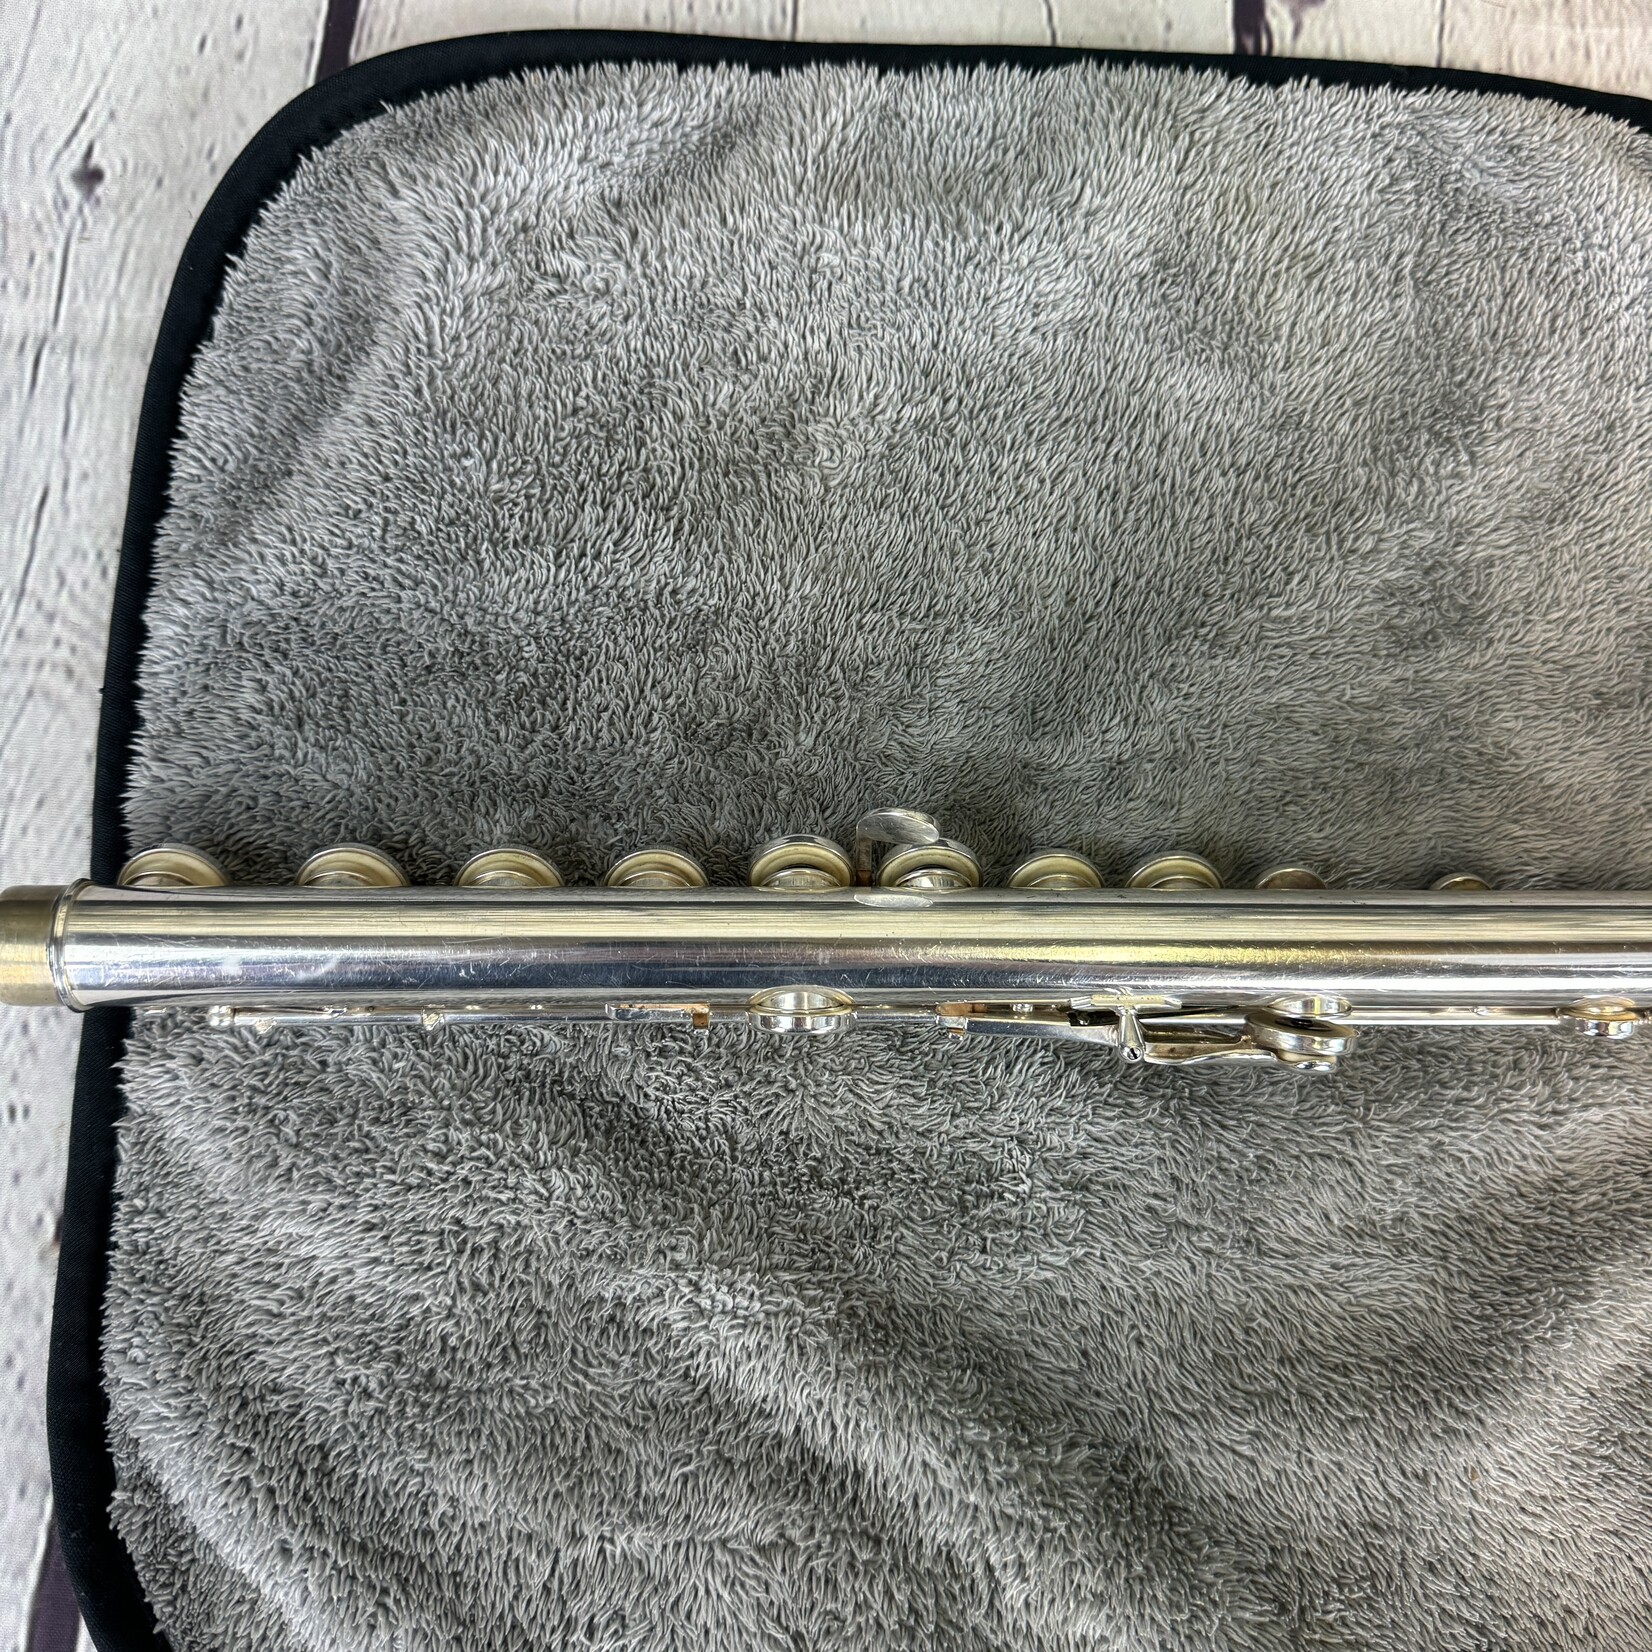 Gemeinhardt 2SP Flute w/ Case - (Used)